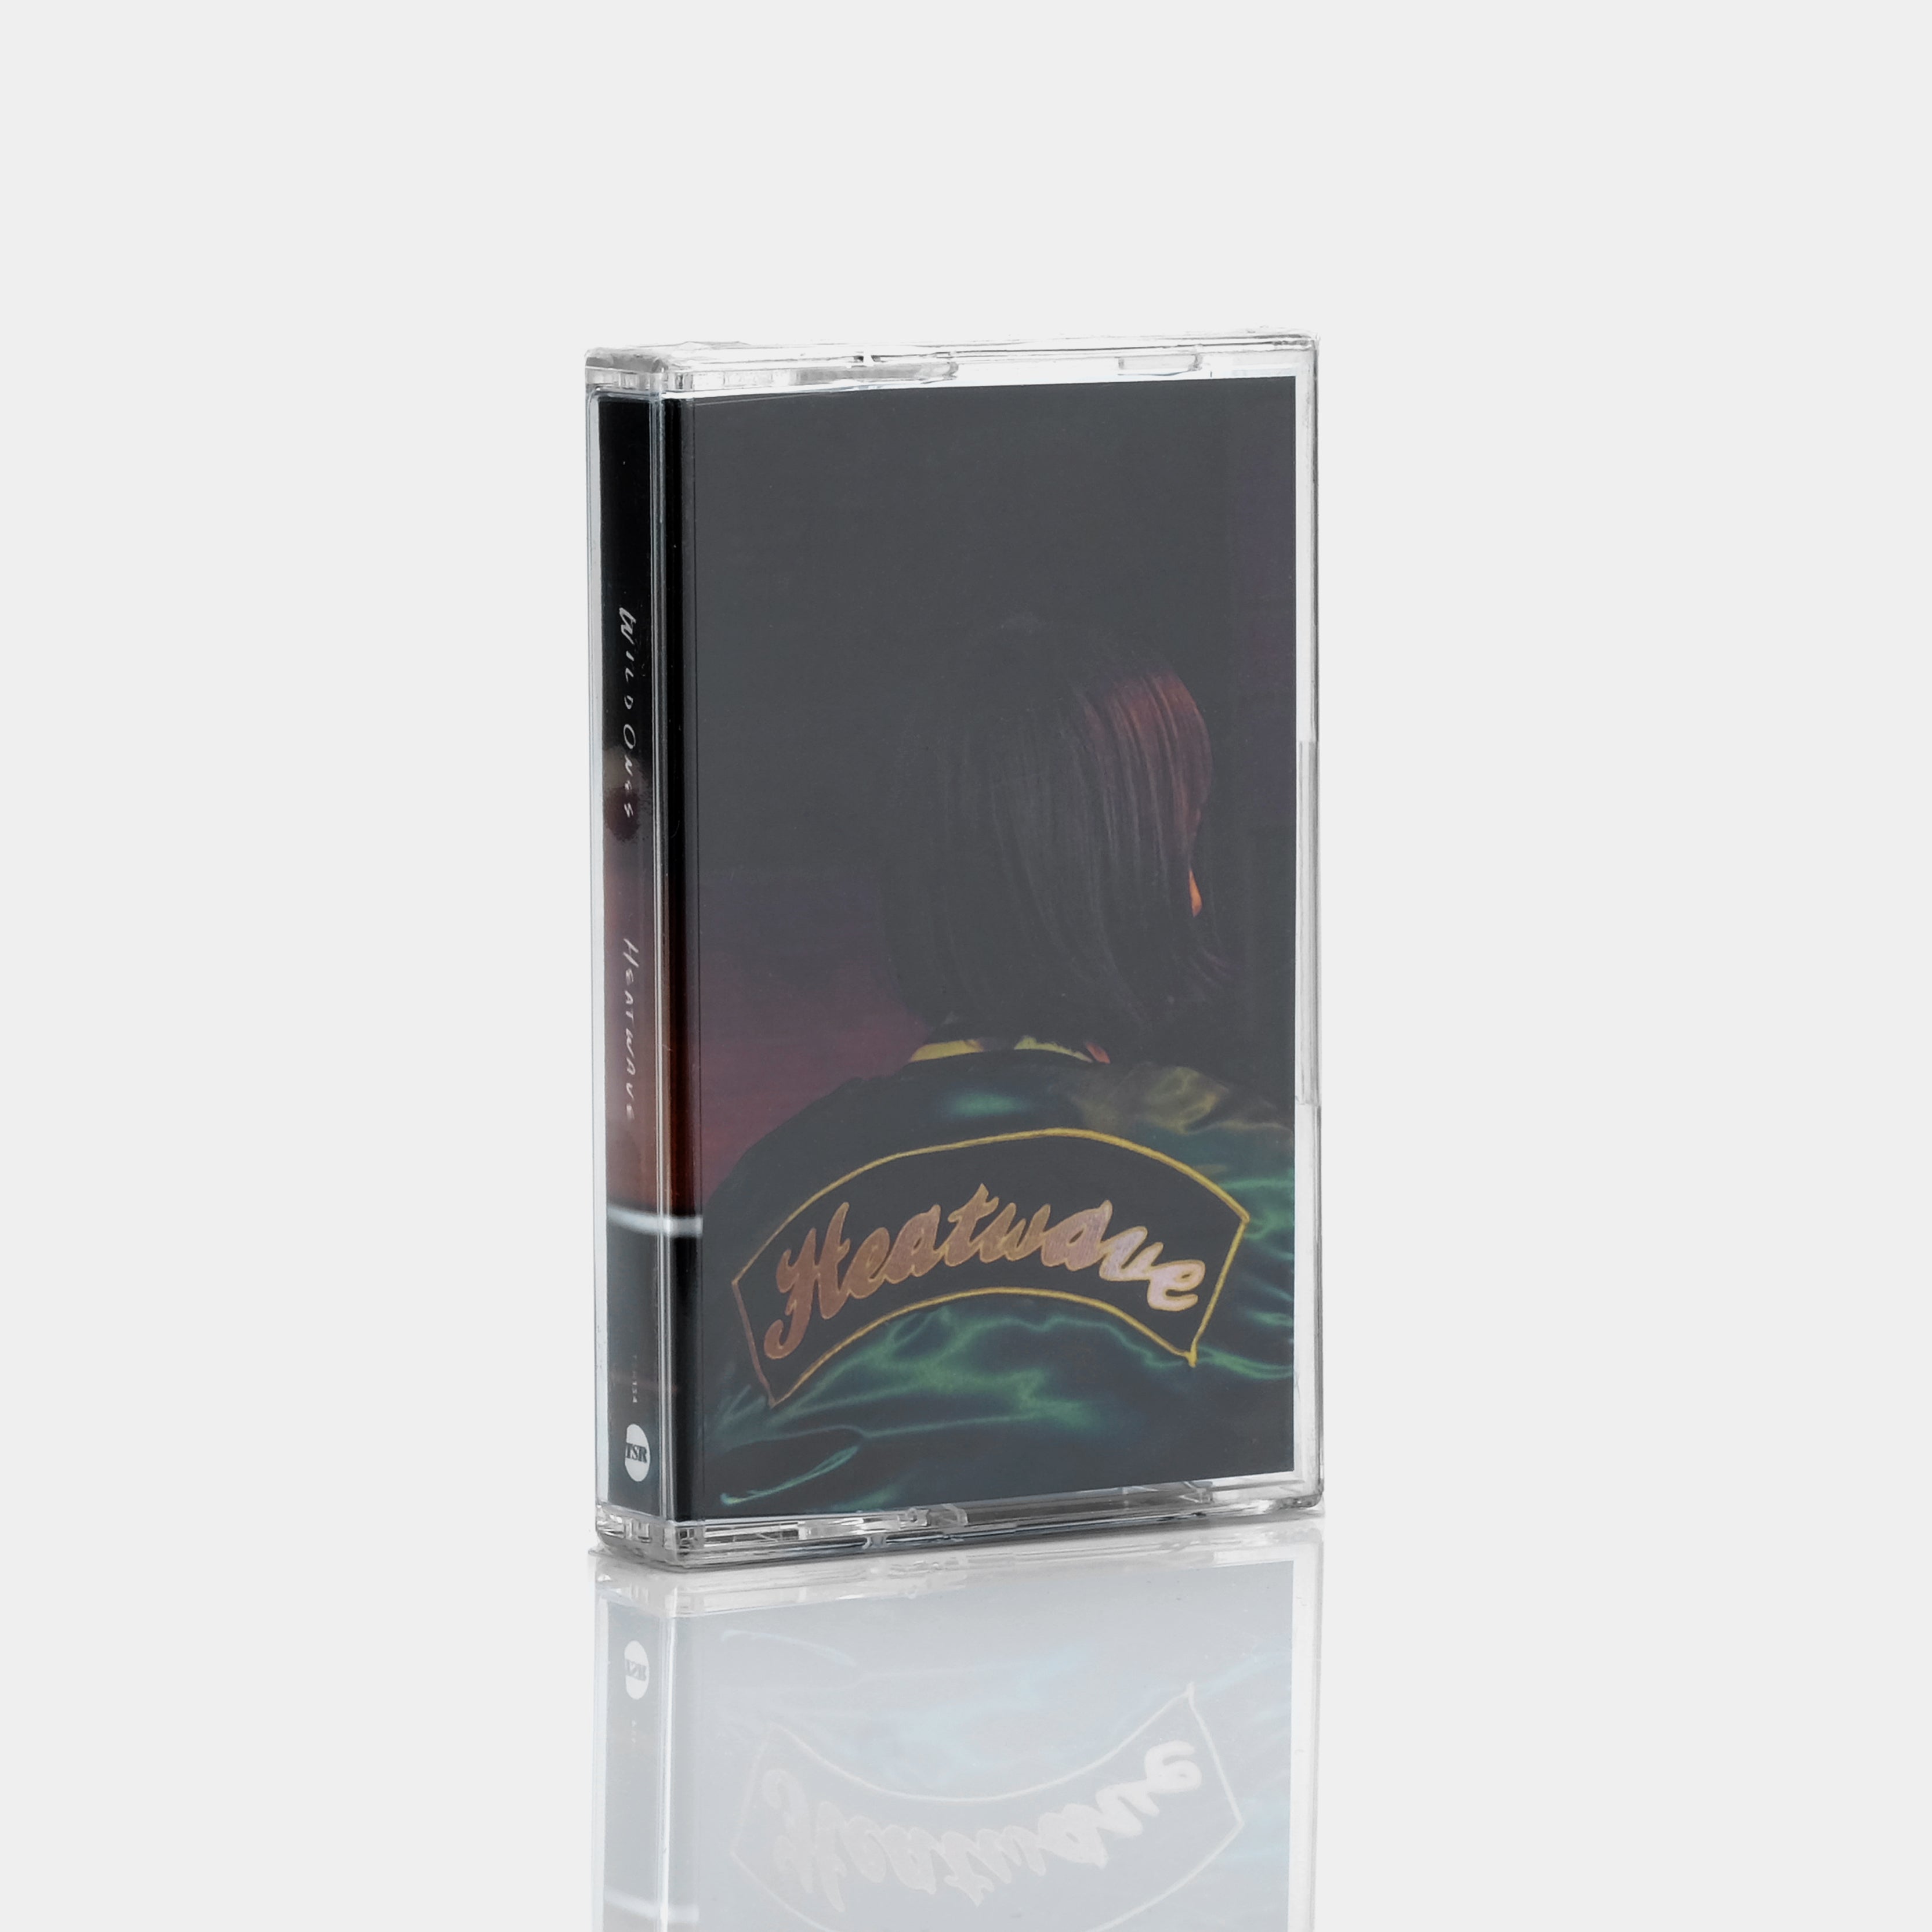 Wild Ones - Heatwave Cassette Tape